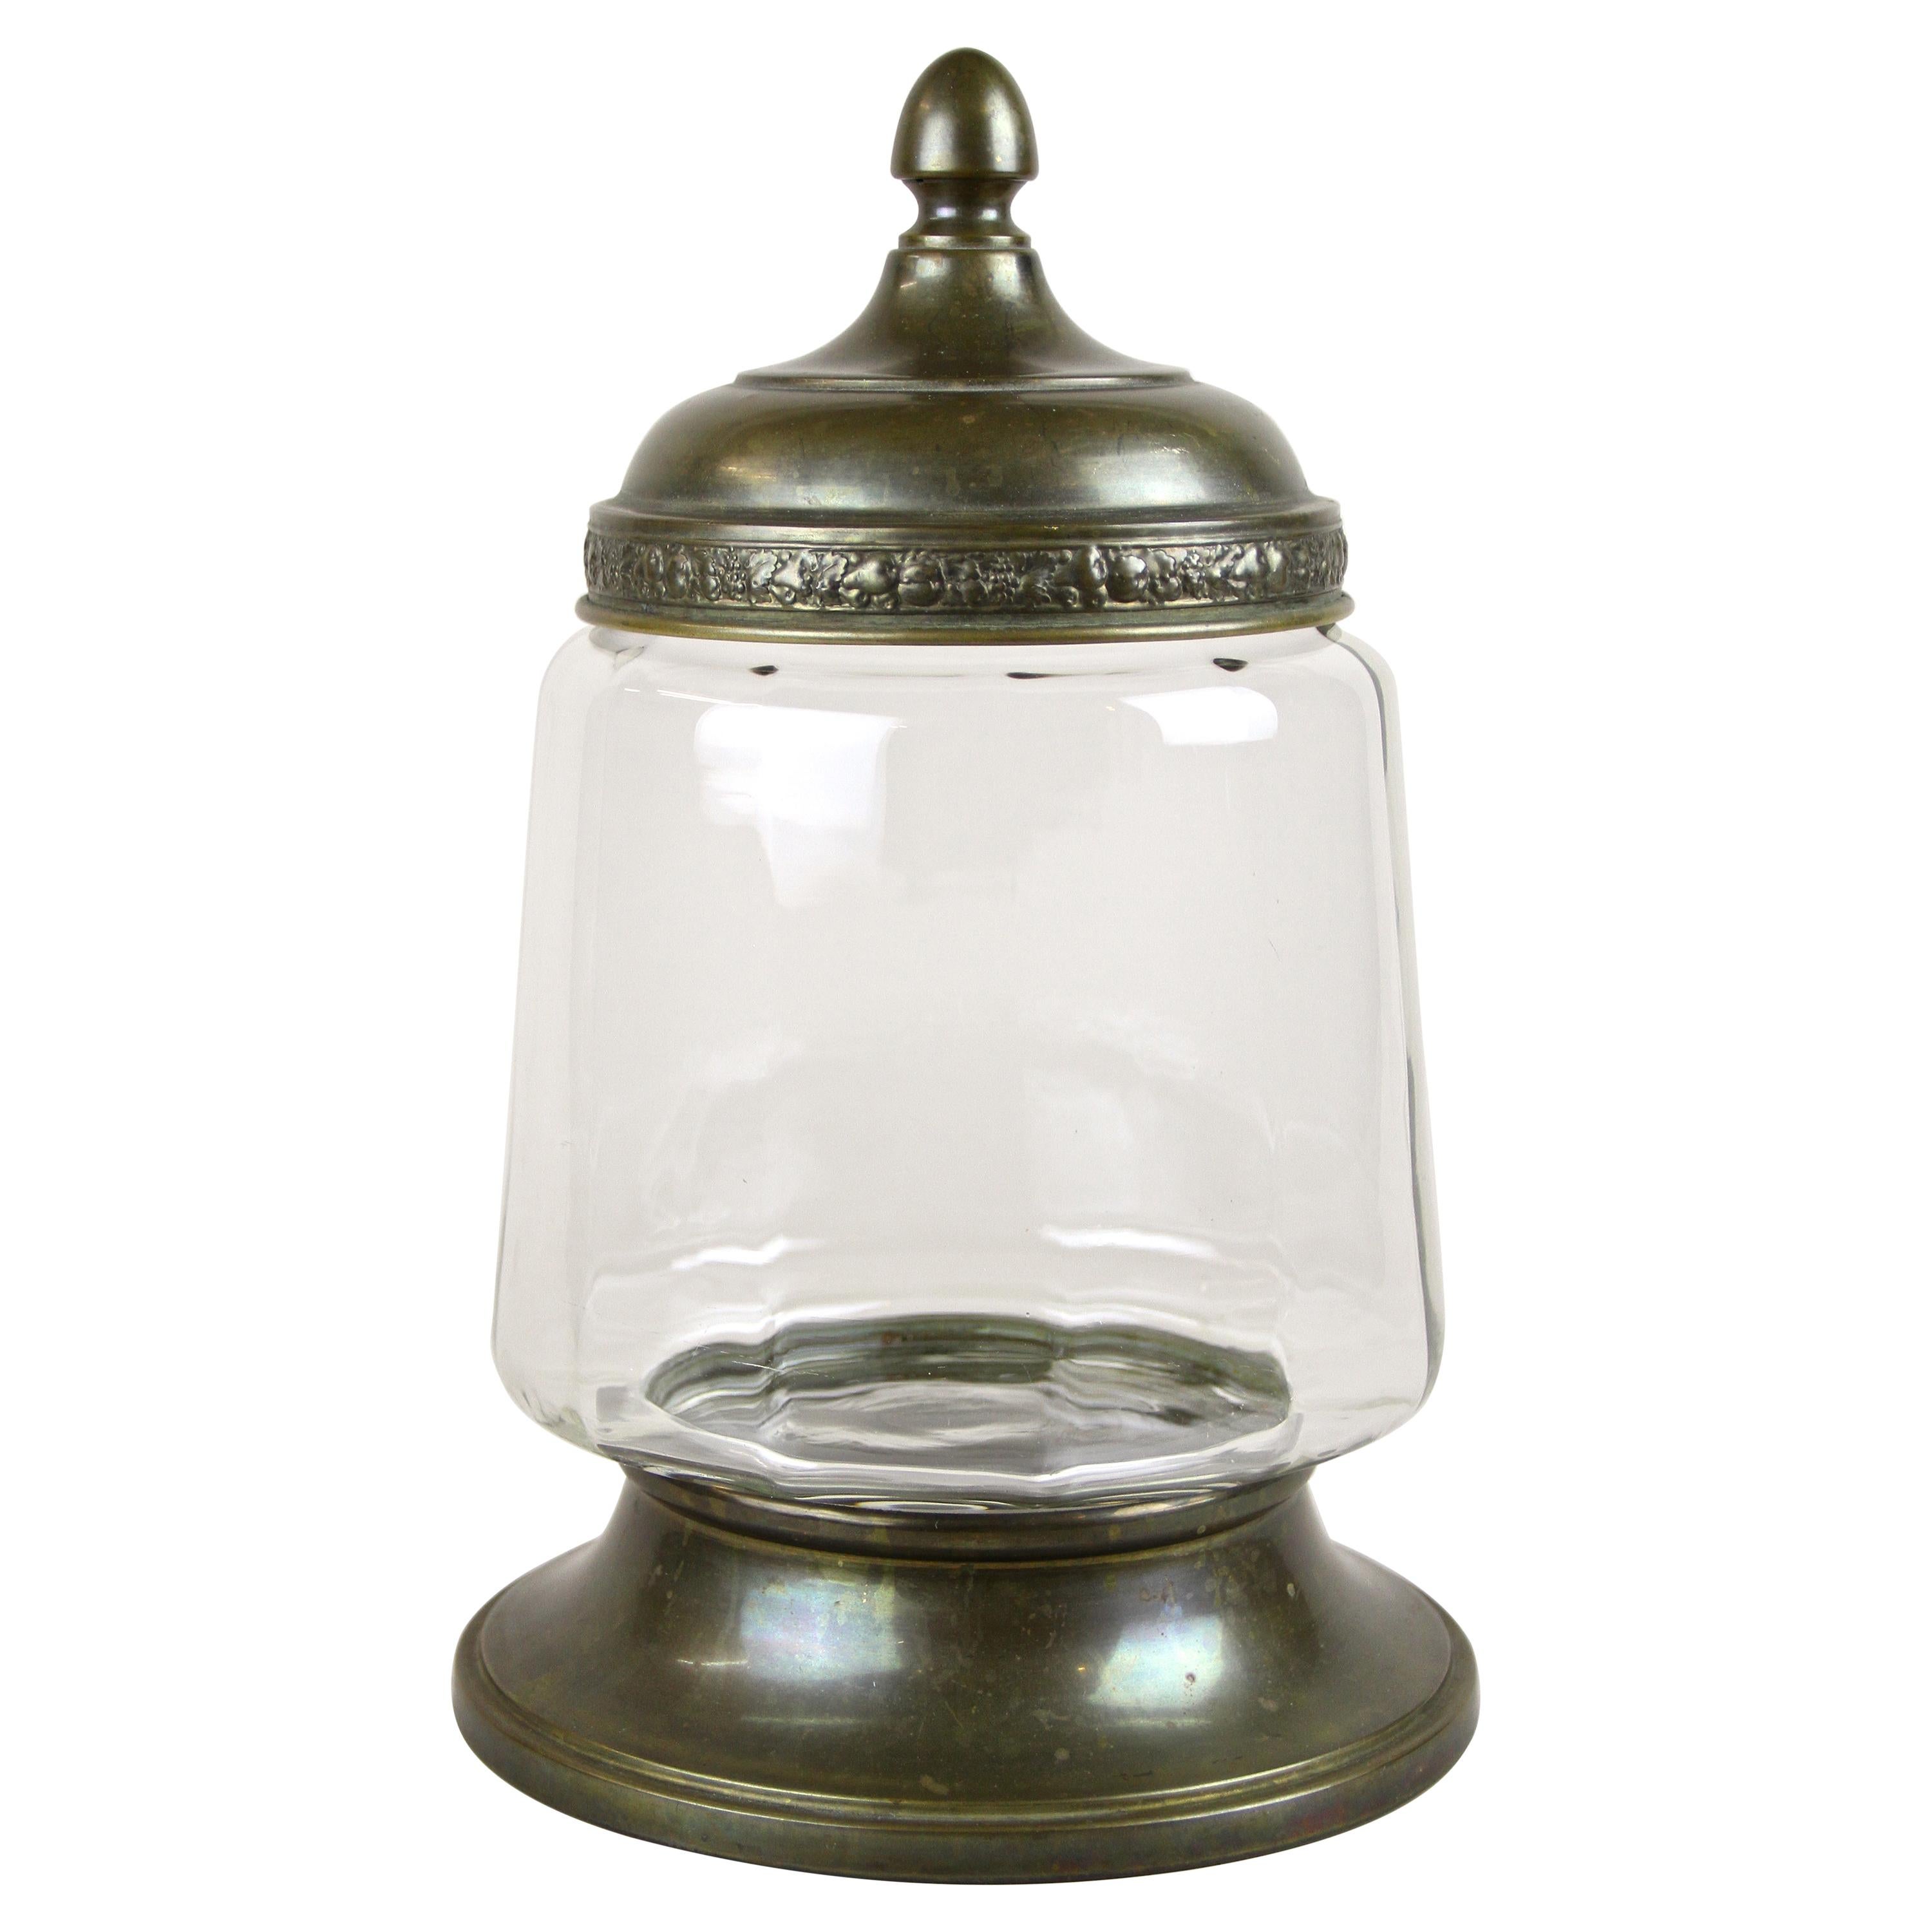 Art Nouveau Candy Glass Jar or Punch Bowl with Lid, Austria, circa 1910